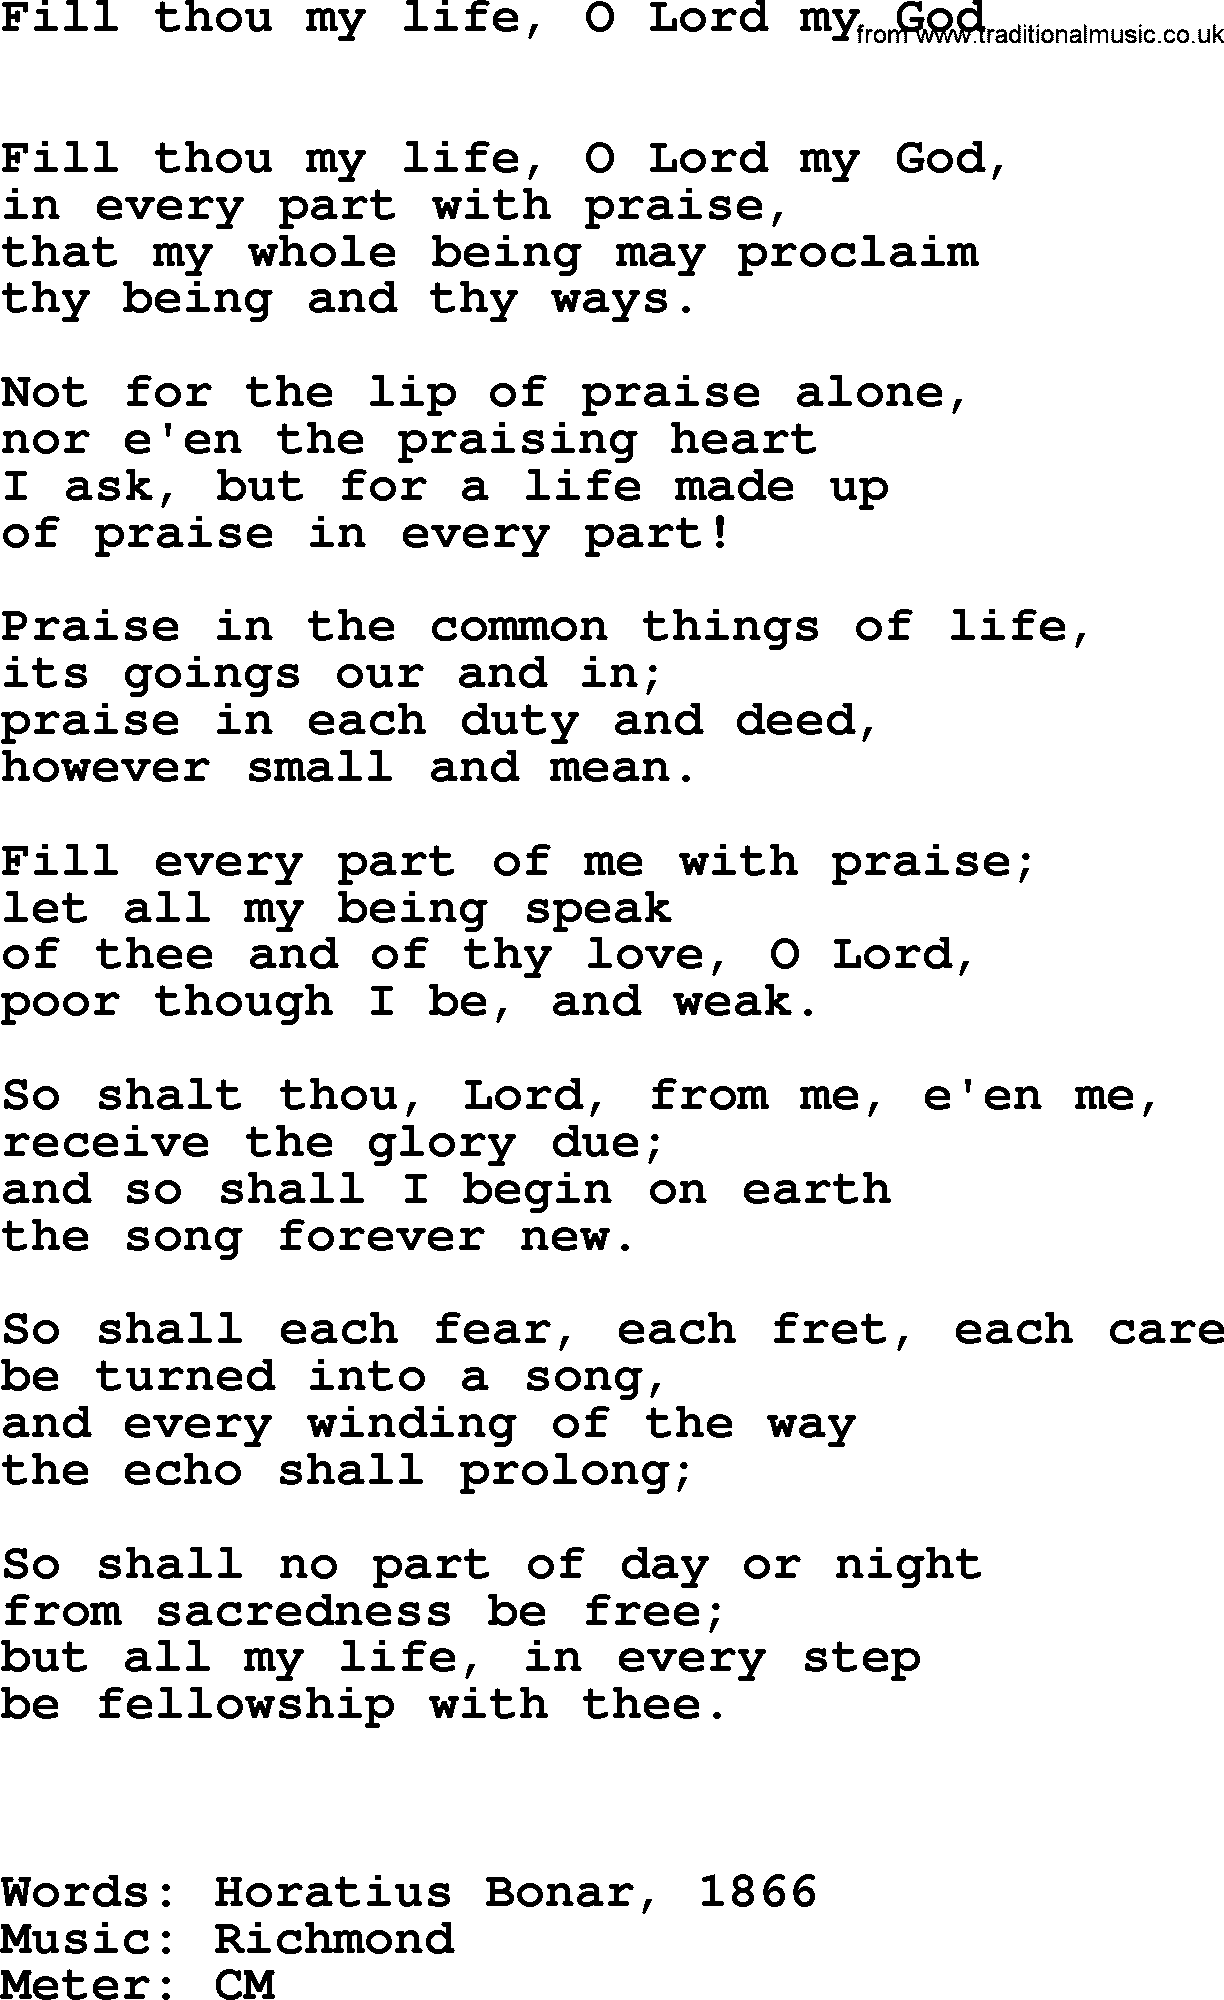 Hymns Ancient and Modern Hymn: Fill Thou My Life, O Lord My God, lyrics with midi music